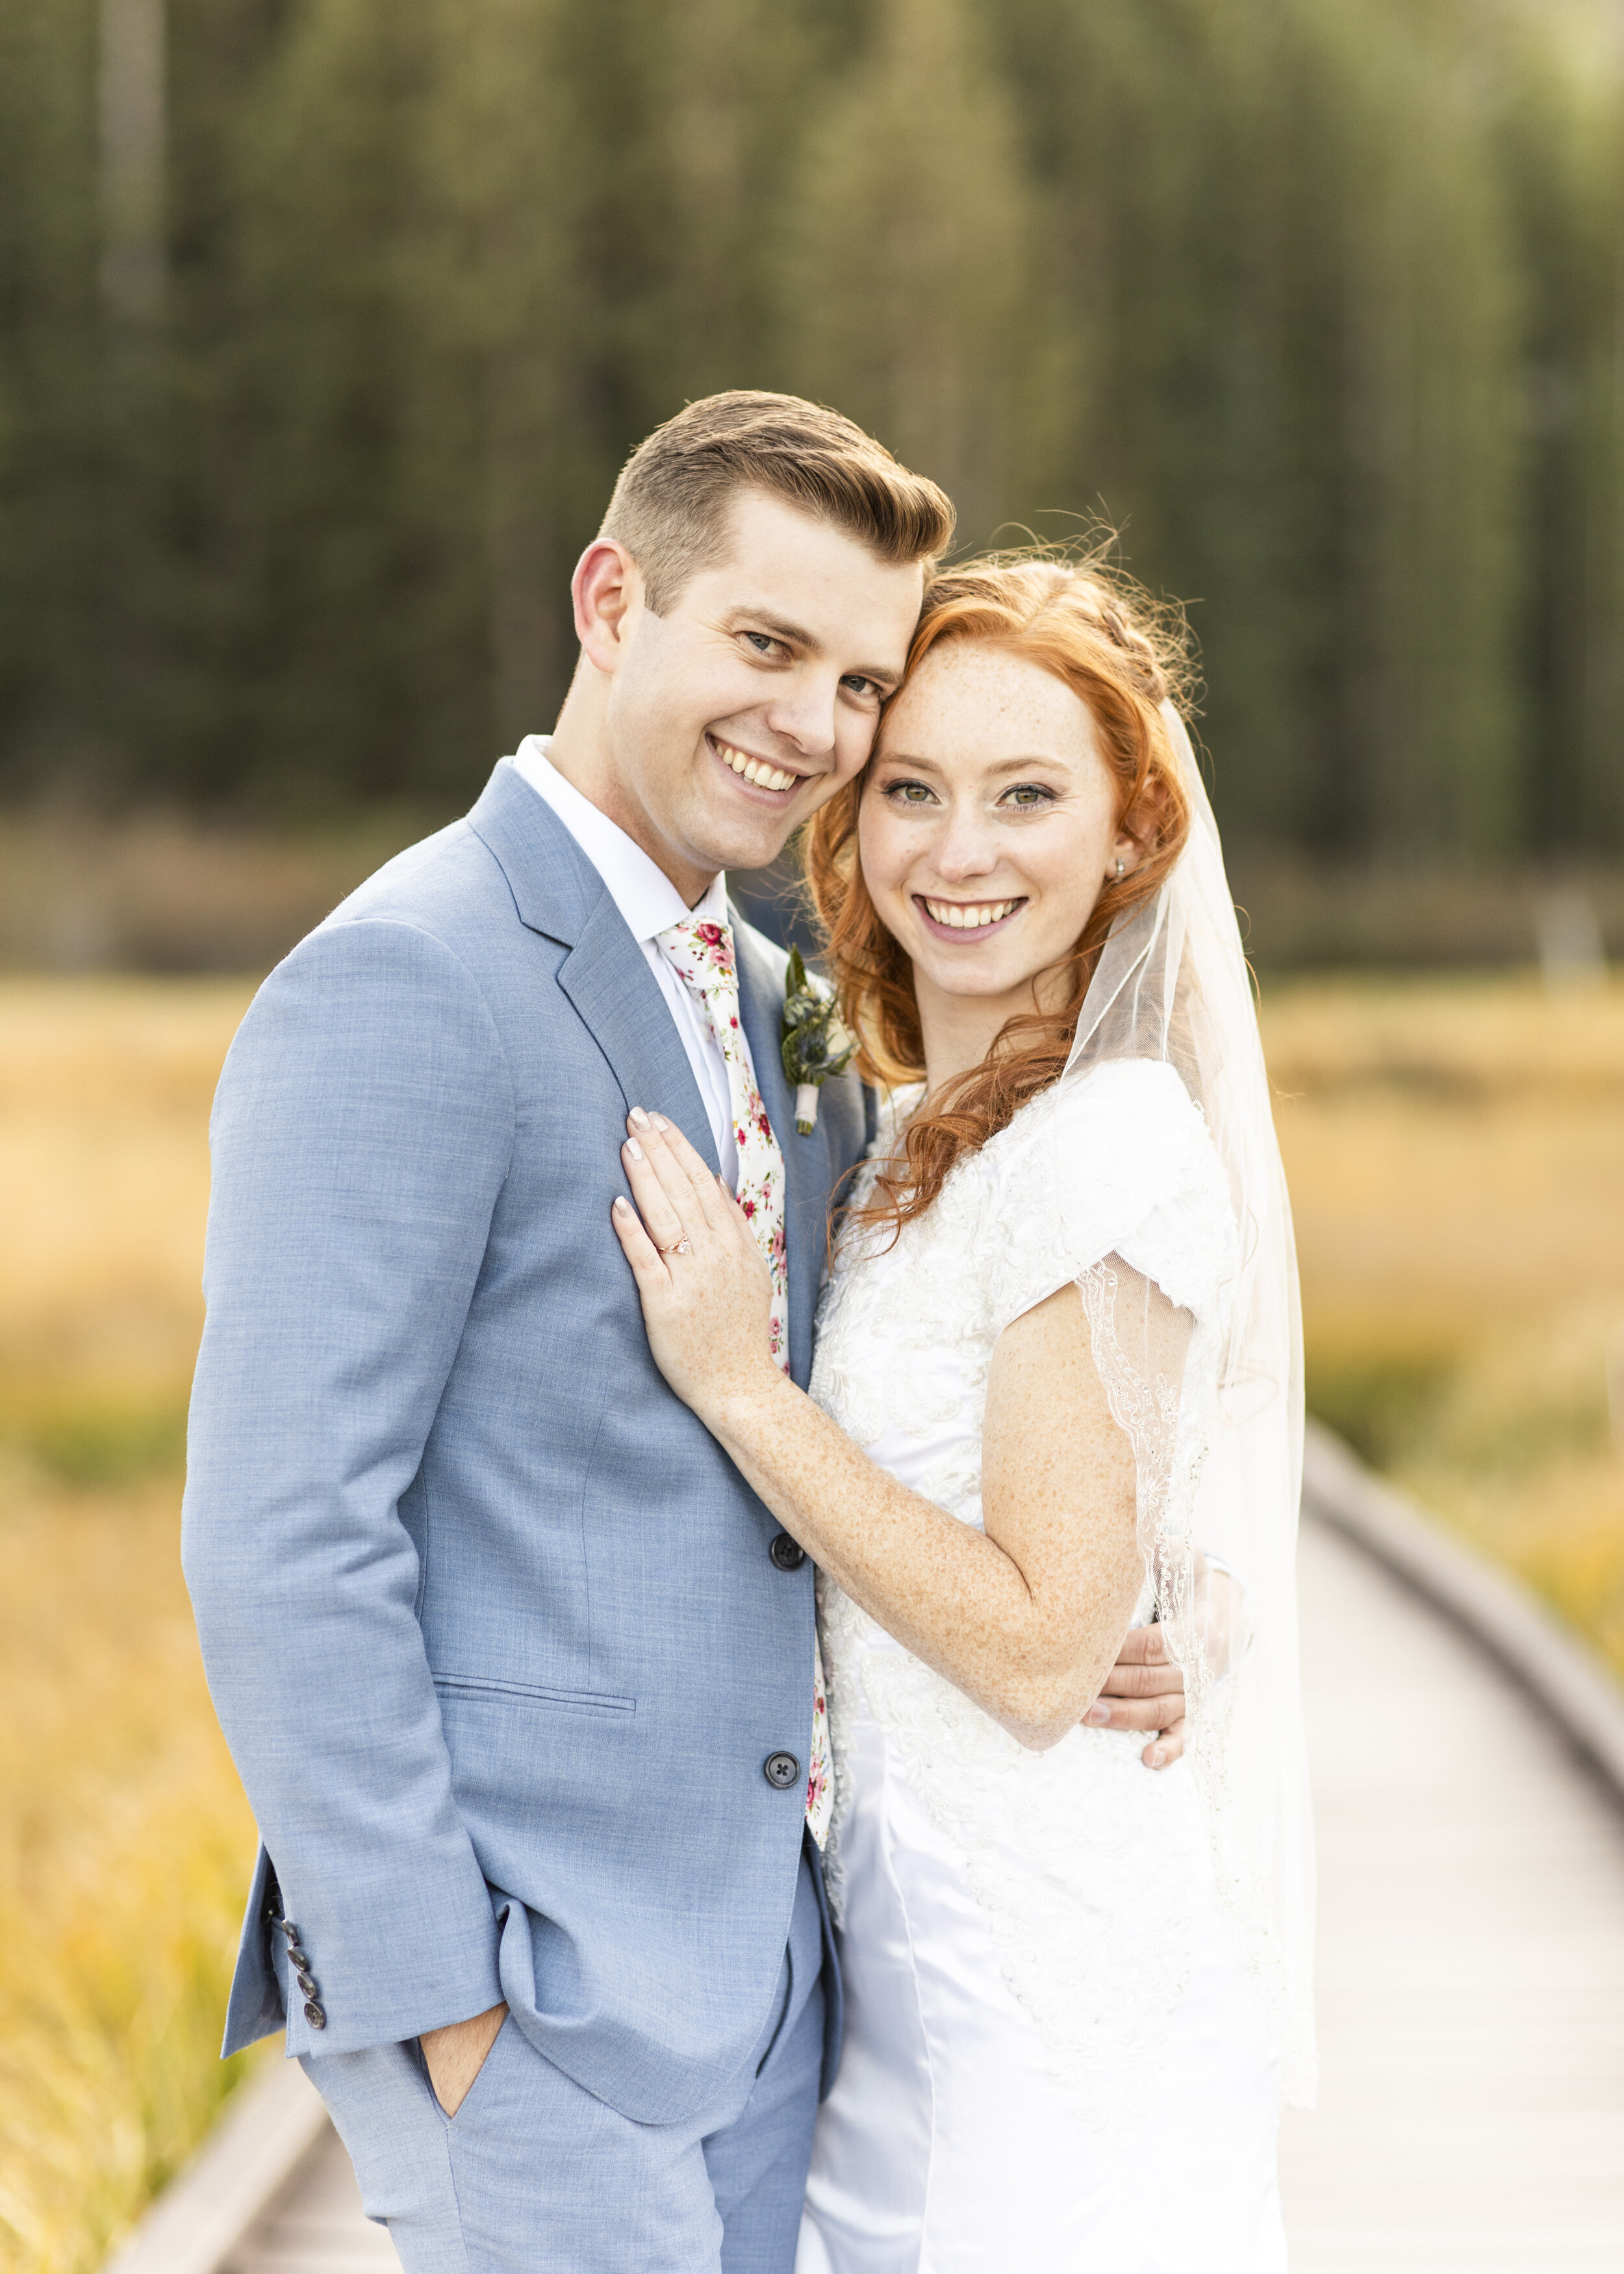 Ayat For Husband Wife Love | Wedding poses, Wedding couple poses,  Engagement photography poses